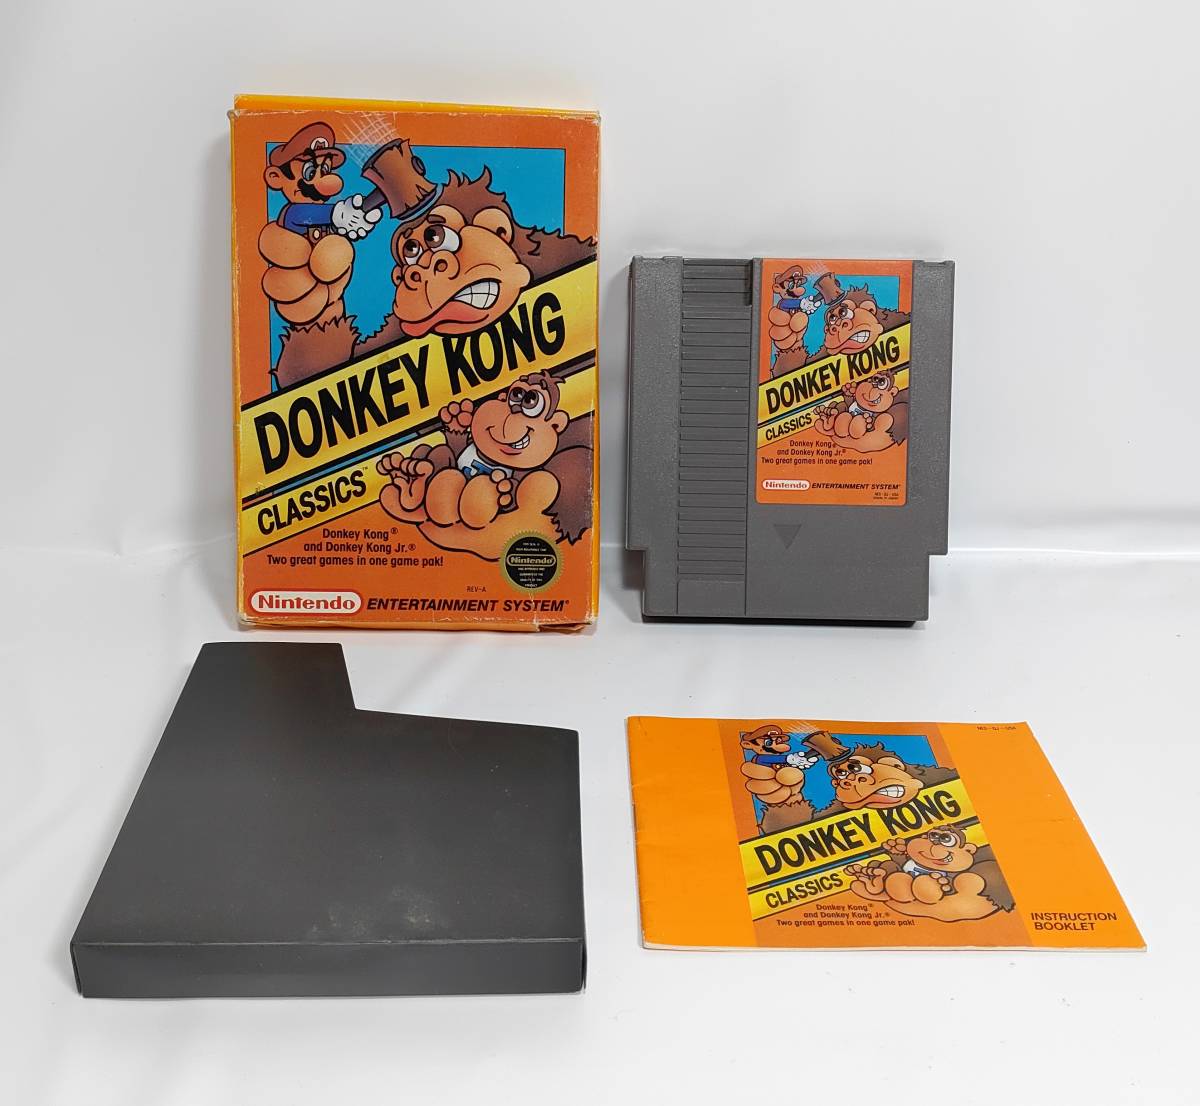 DONKEY KONG CLSCCIC ドンキーコング クラシック 北米版 US版 NES FC